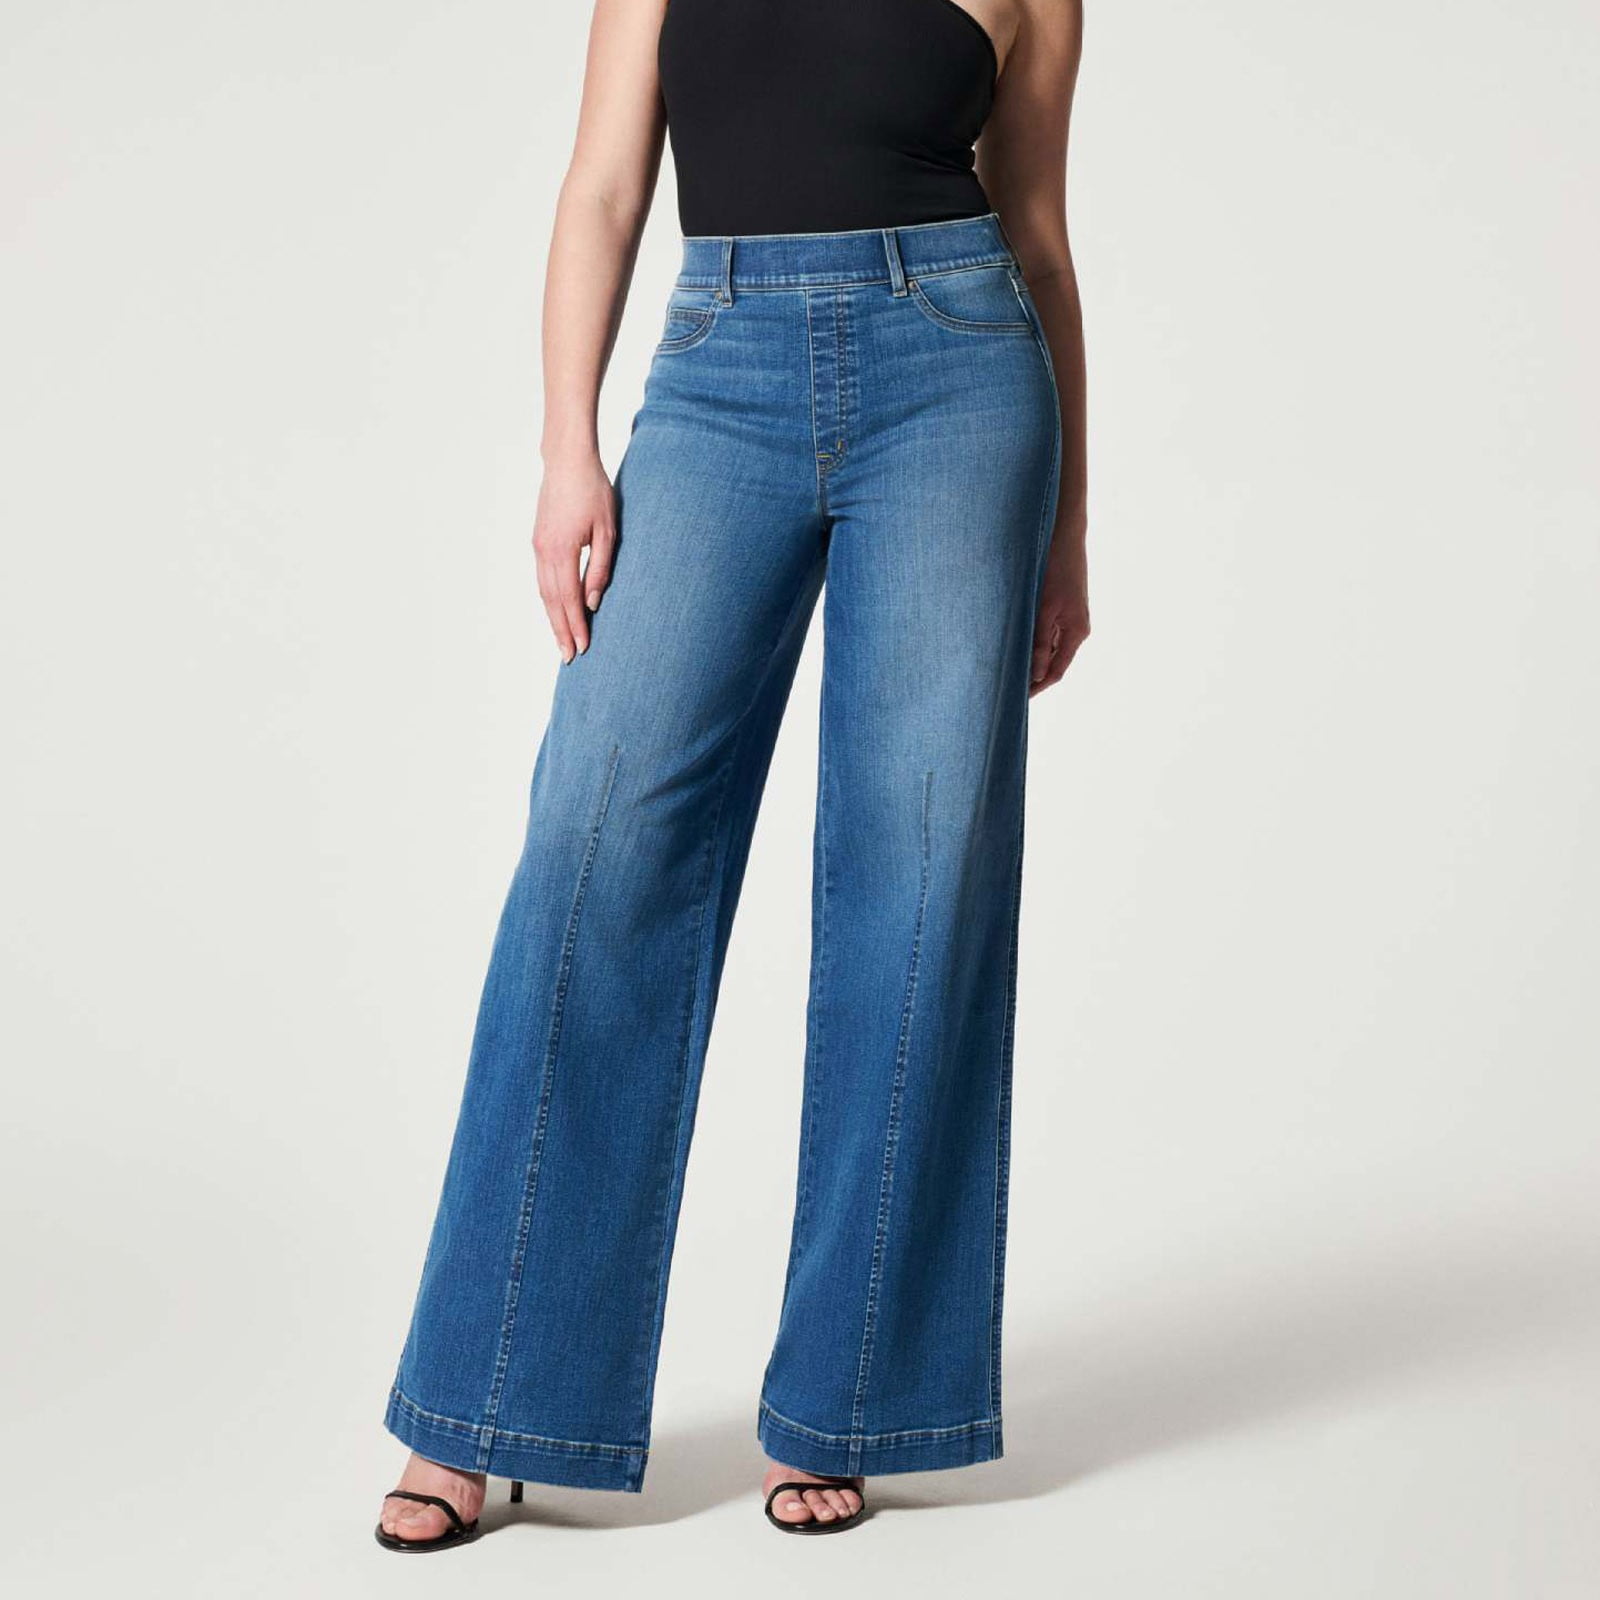 Guvpev Women's Plus Size Wide Leg Cotton Jean Seamed Front Wide Leg Jeans Casual Fashion Trousers Walmart.com